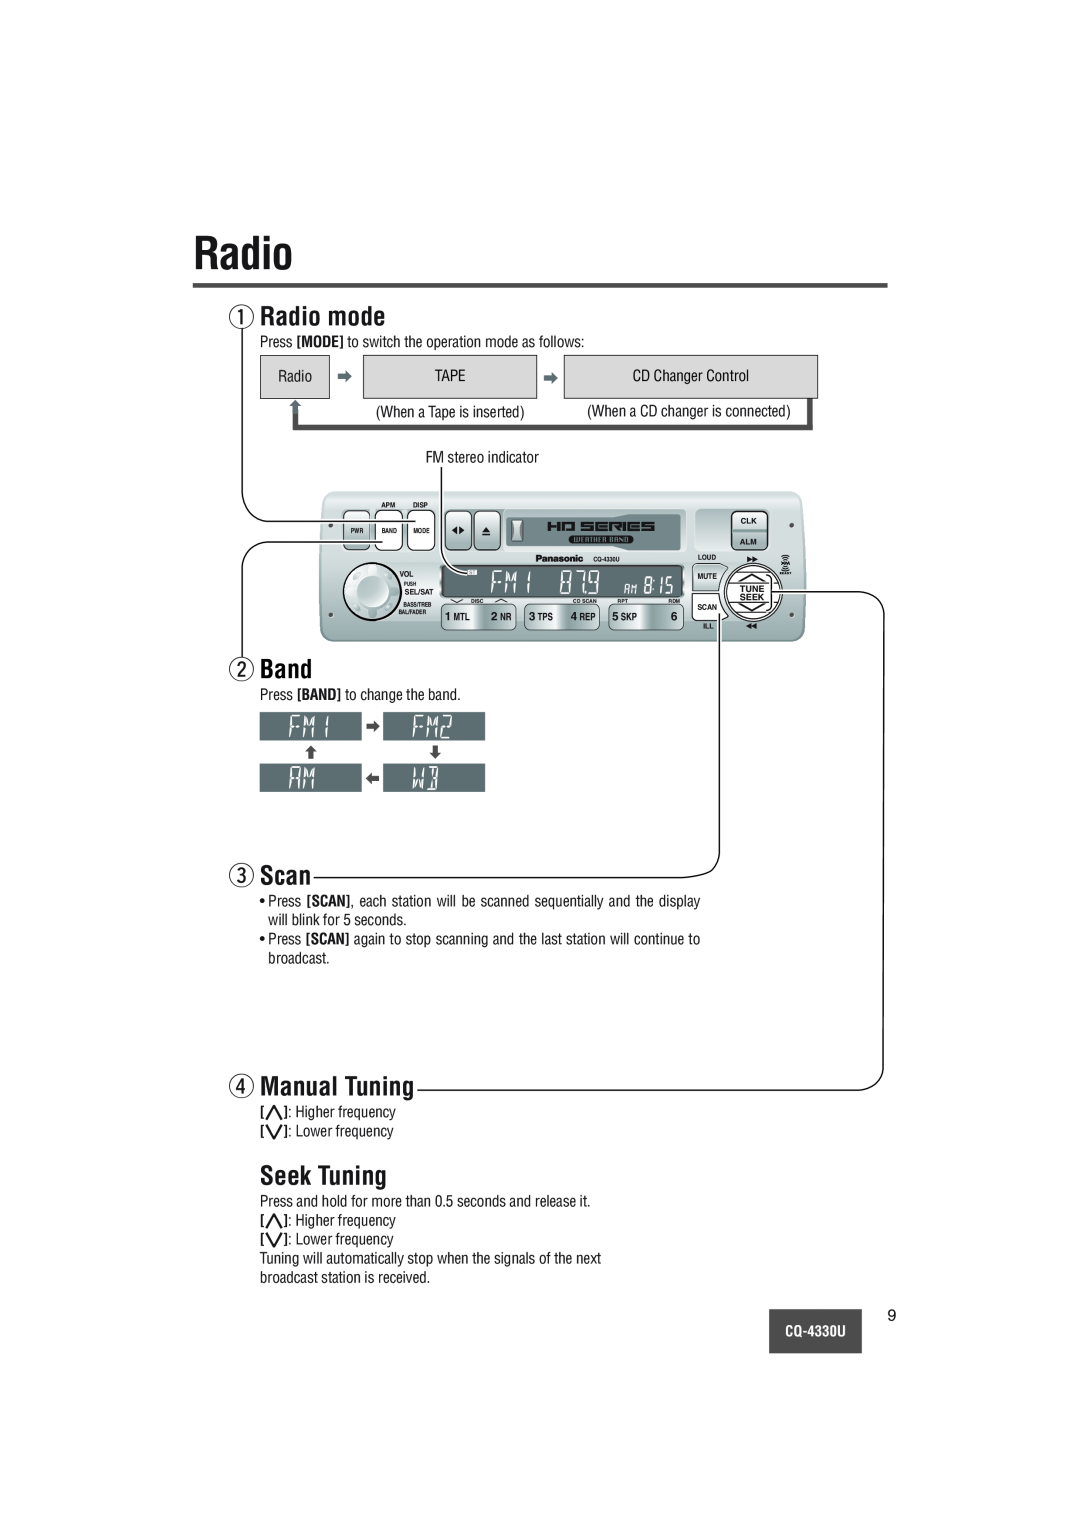 Panasonic CQ-4330U qRadio mode, wBand, eScan, r Manual Tuning, Seek Tuning, CD Changer Control, FM stereo indicator 